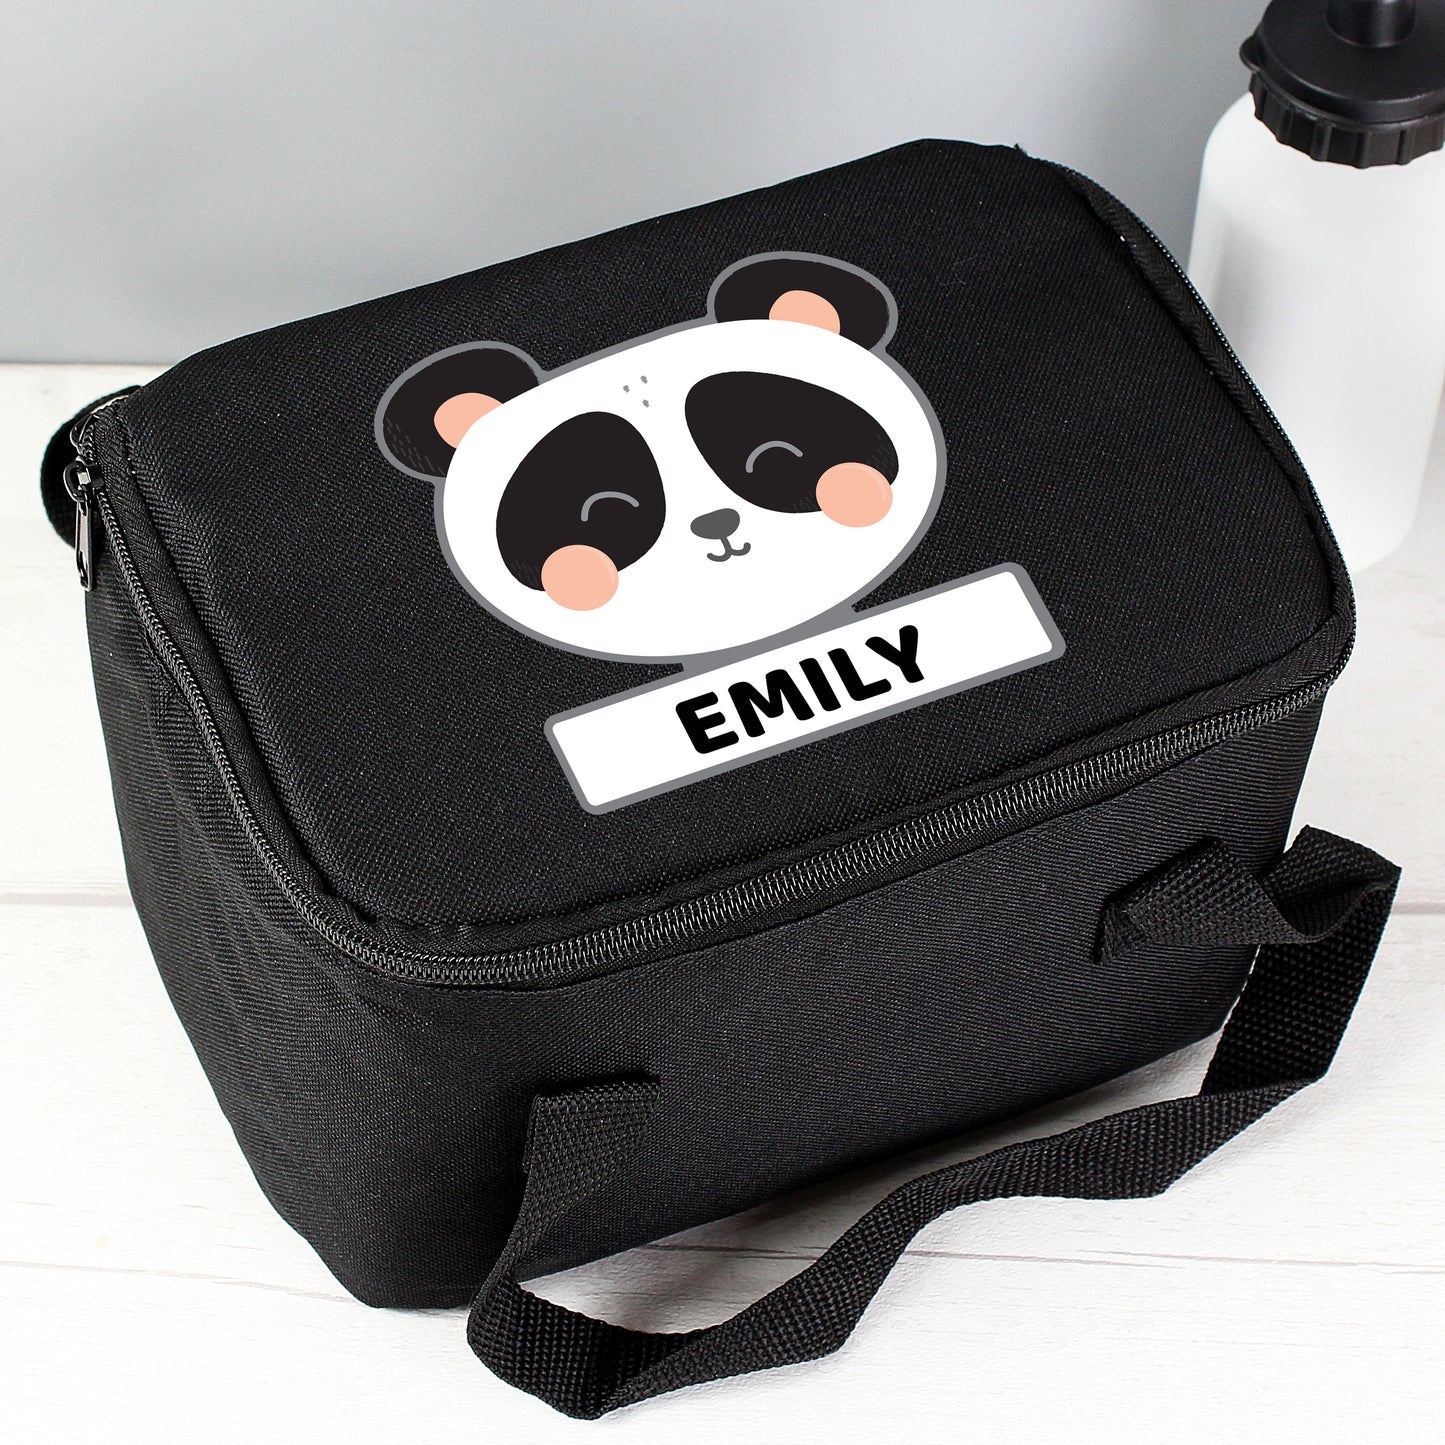 Personalised Panda Black Lunch Bag - Personalise It!